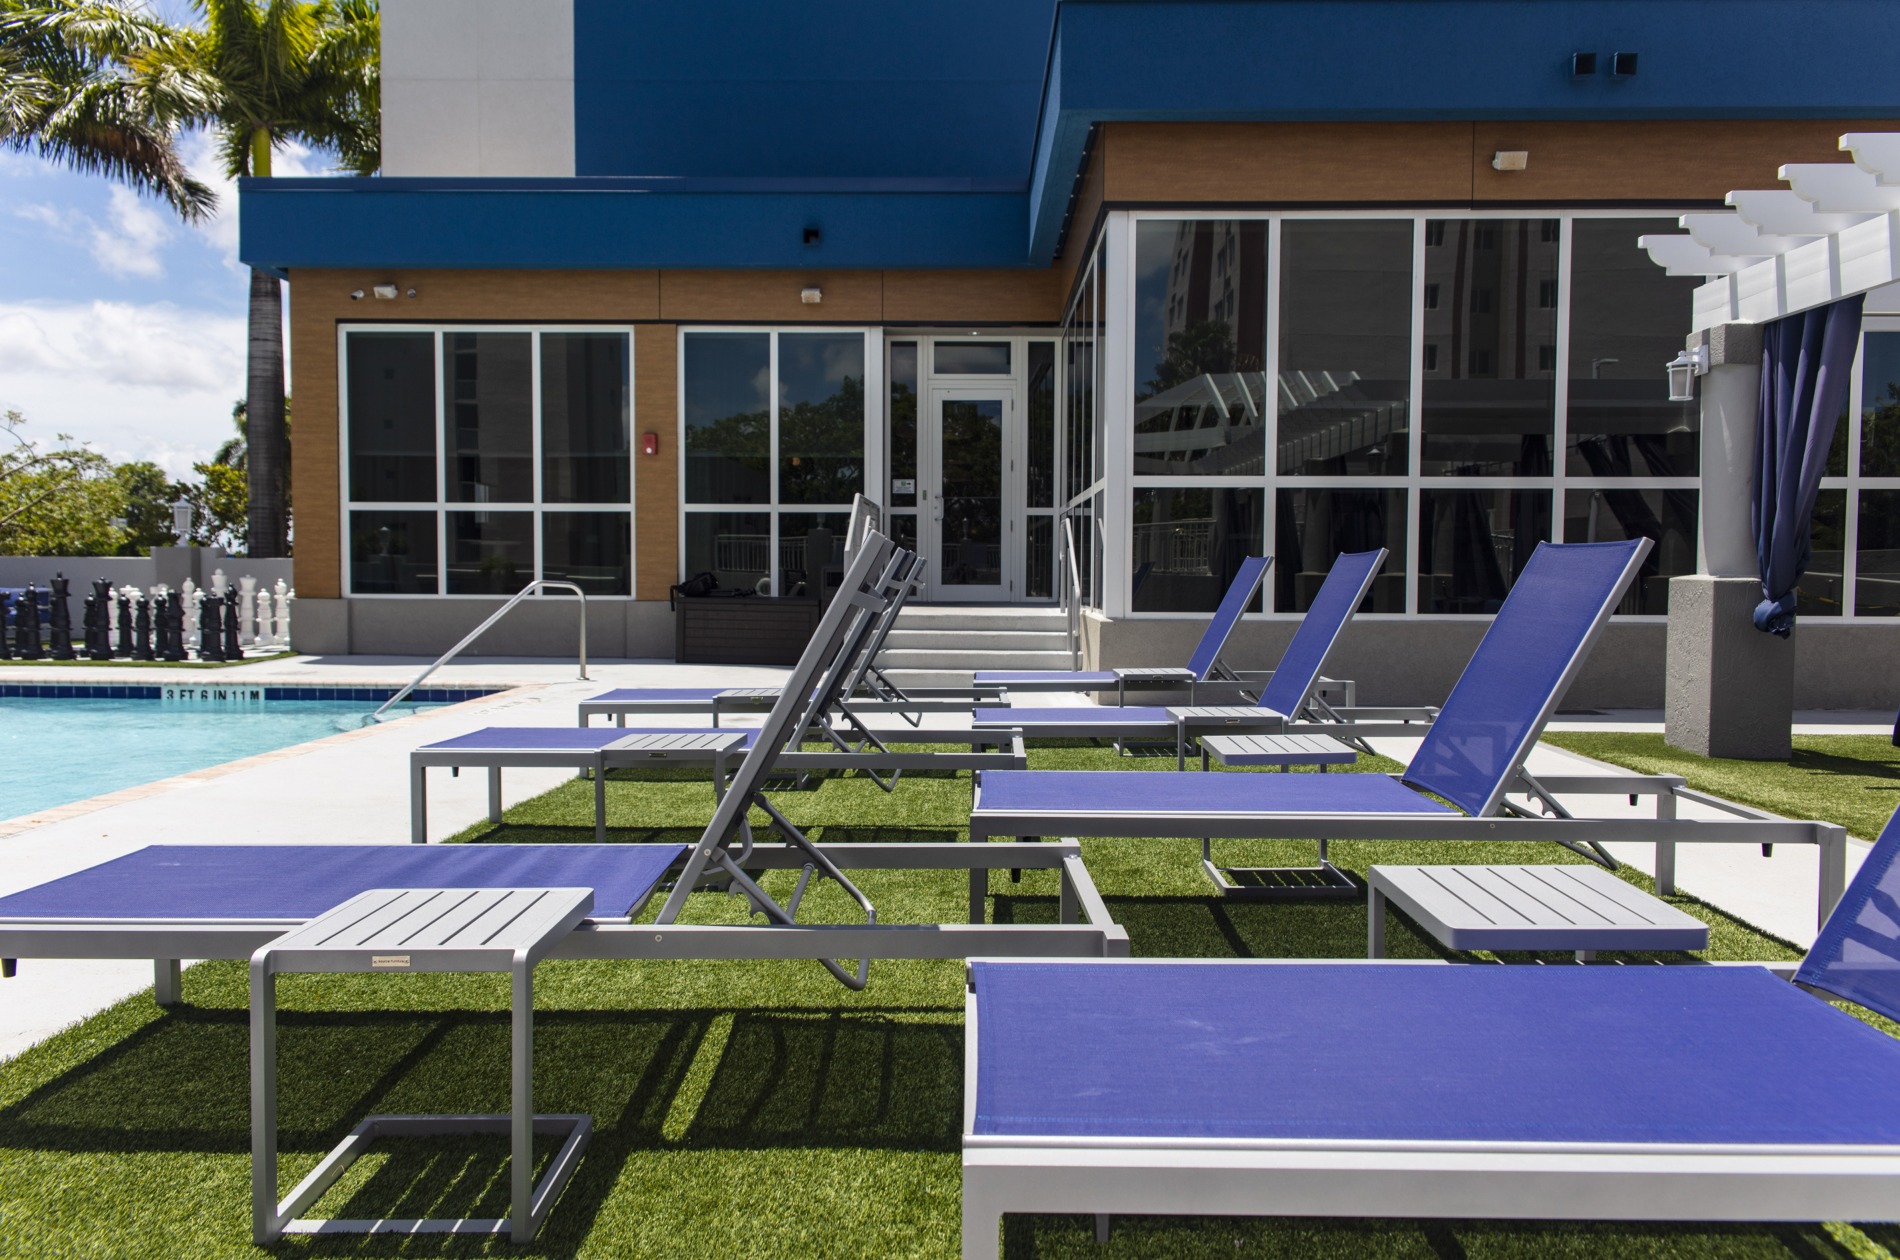 Hampton Inn & Suites by Hilton Miami Airport South / Blue Lagoon - Pool Area